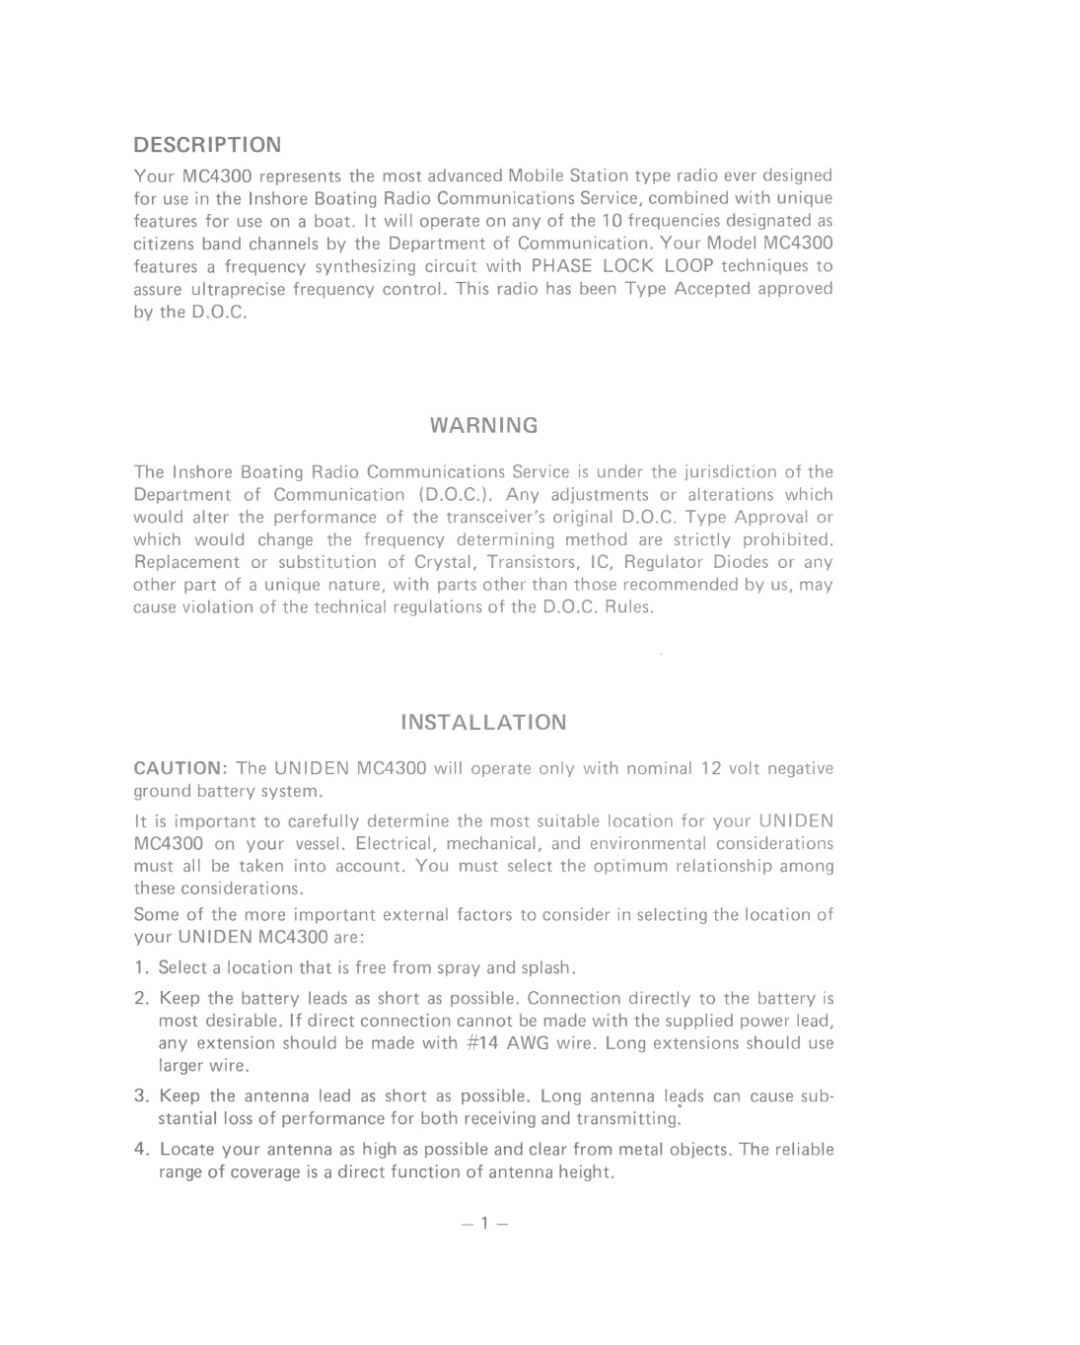 Uniden MC-4300 manual Description, INSTAllATION 